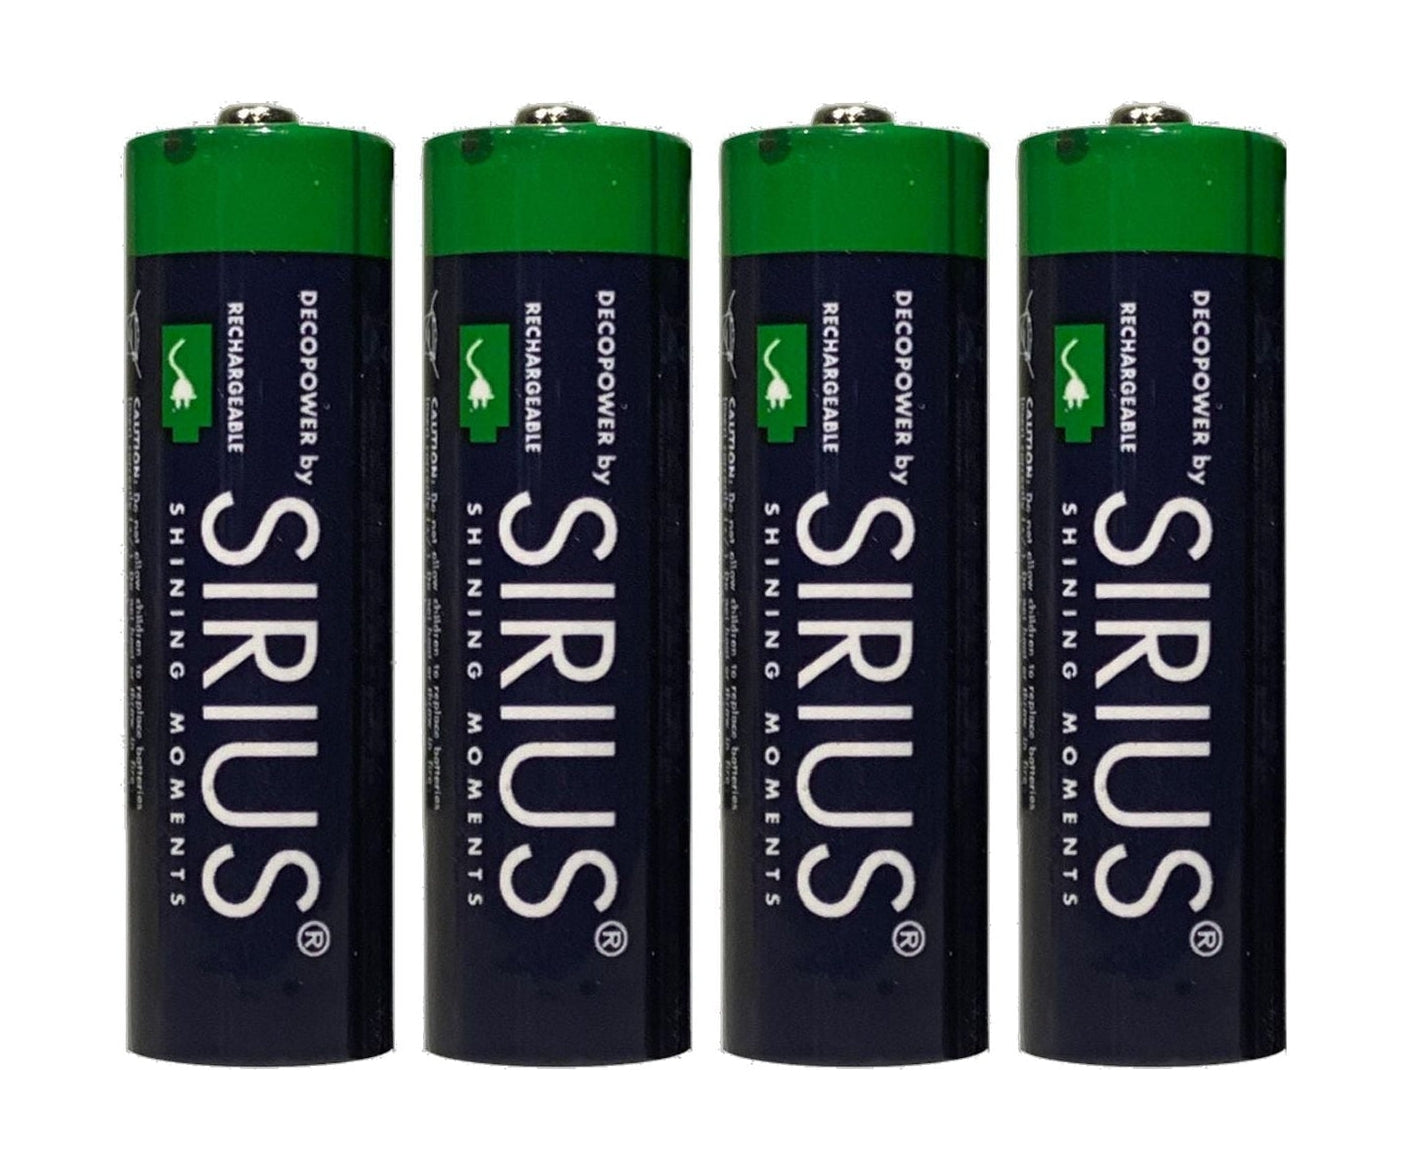 Sirius Deco Power Aa Rechargeable Batteries, 4 Pcs Set